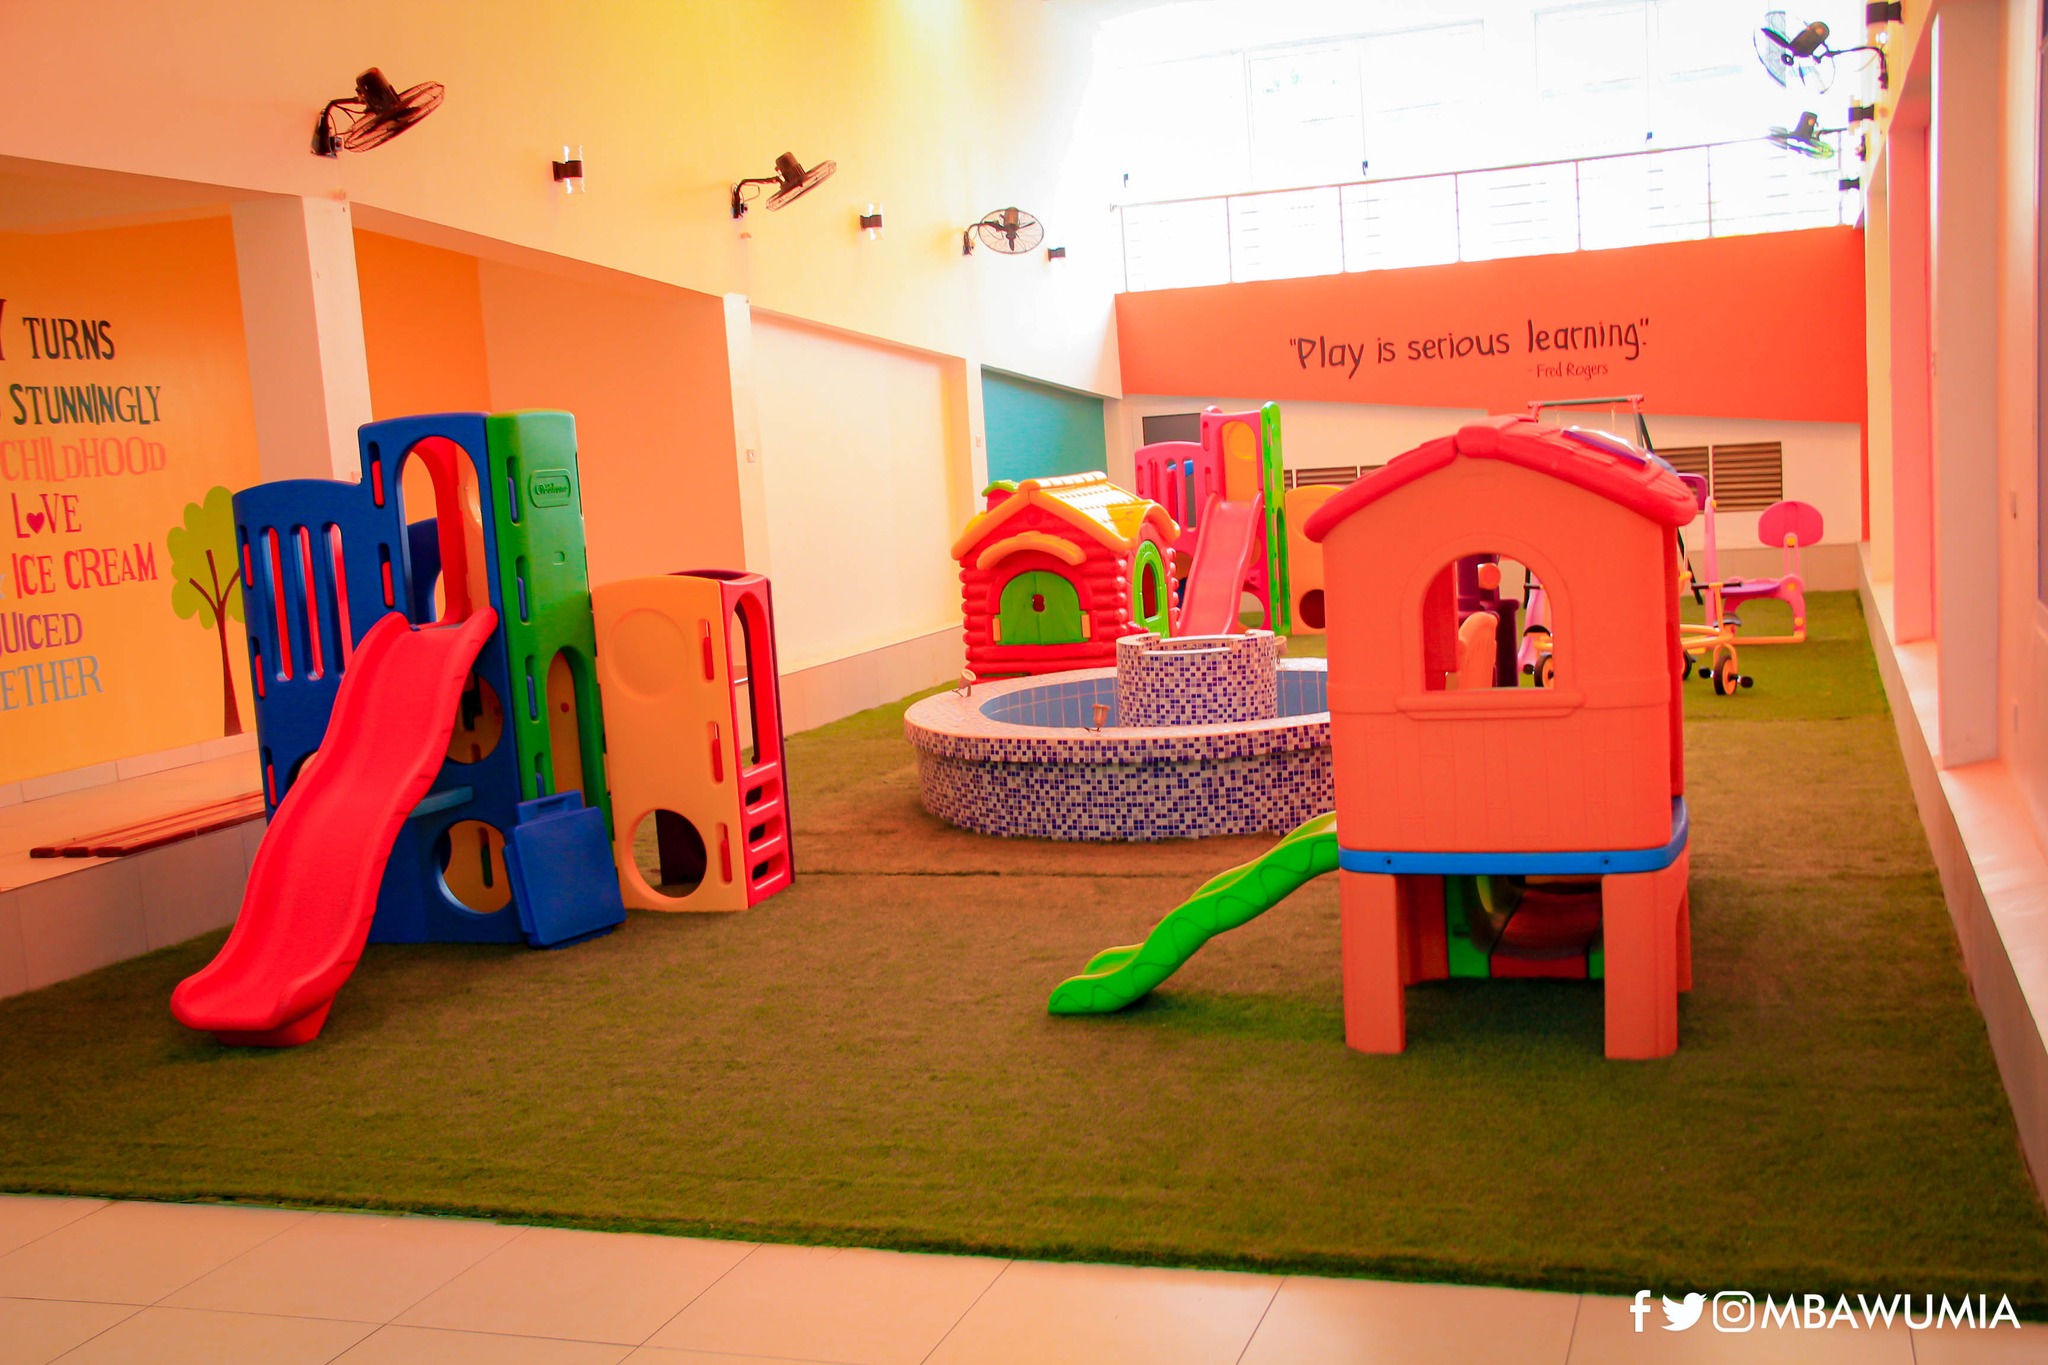 The National Children's Bank has a children's playground